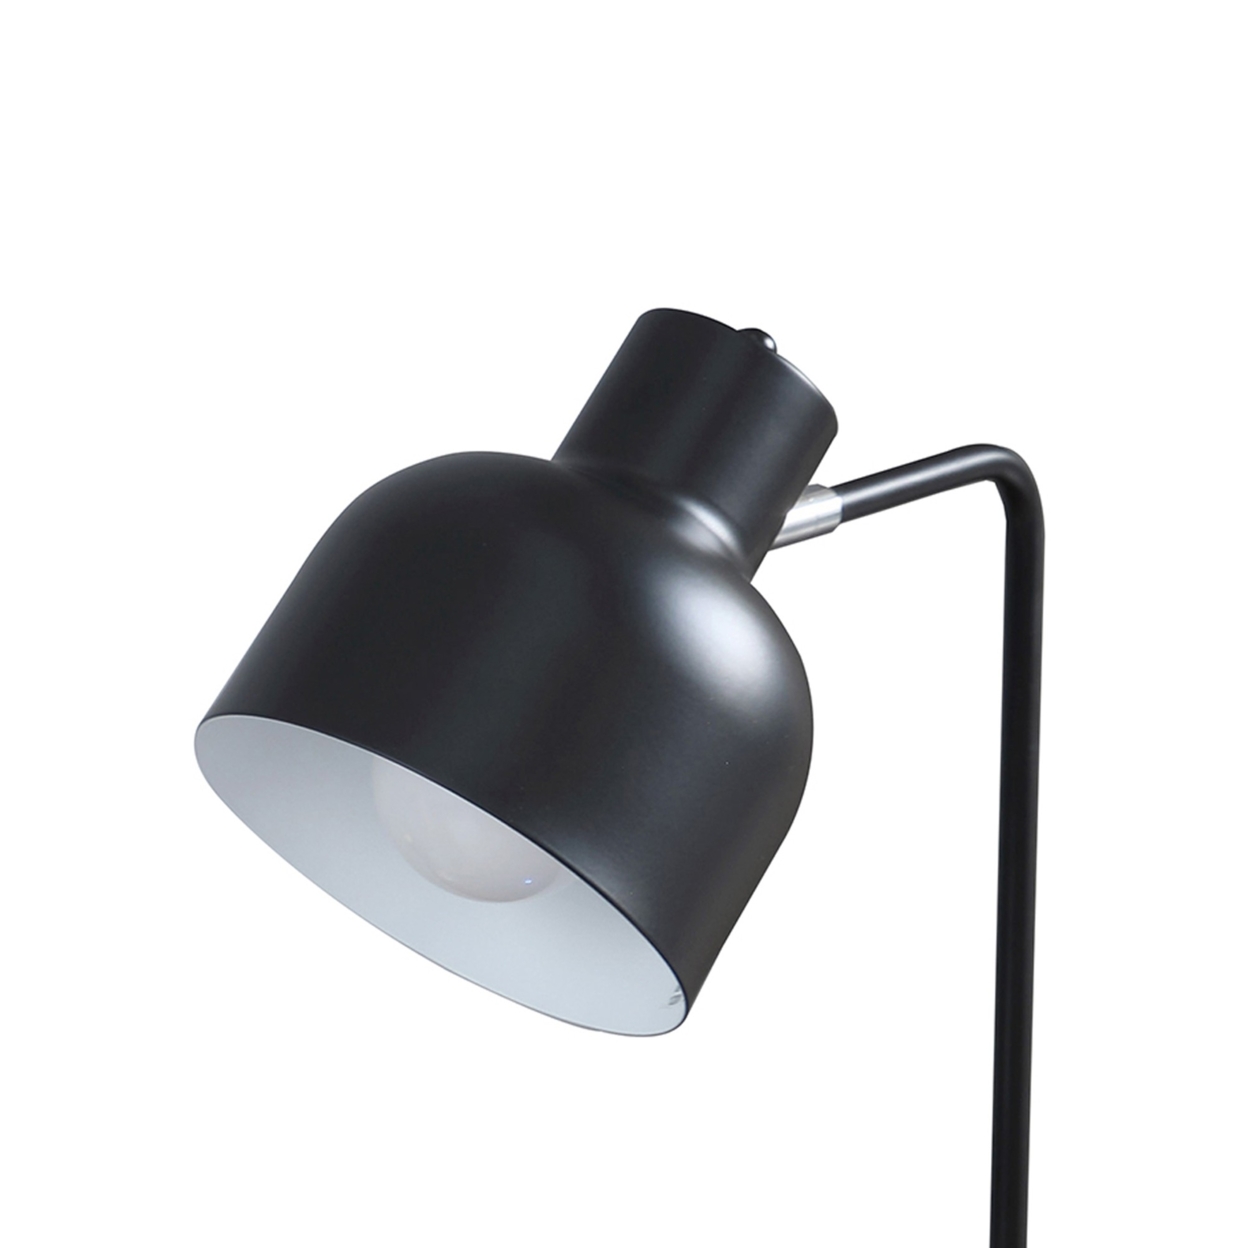 15 Inch Metal Table Lamp, Adjustable Shade, Wireless Charging, Black- Saltoro Sherpi